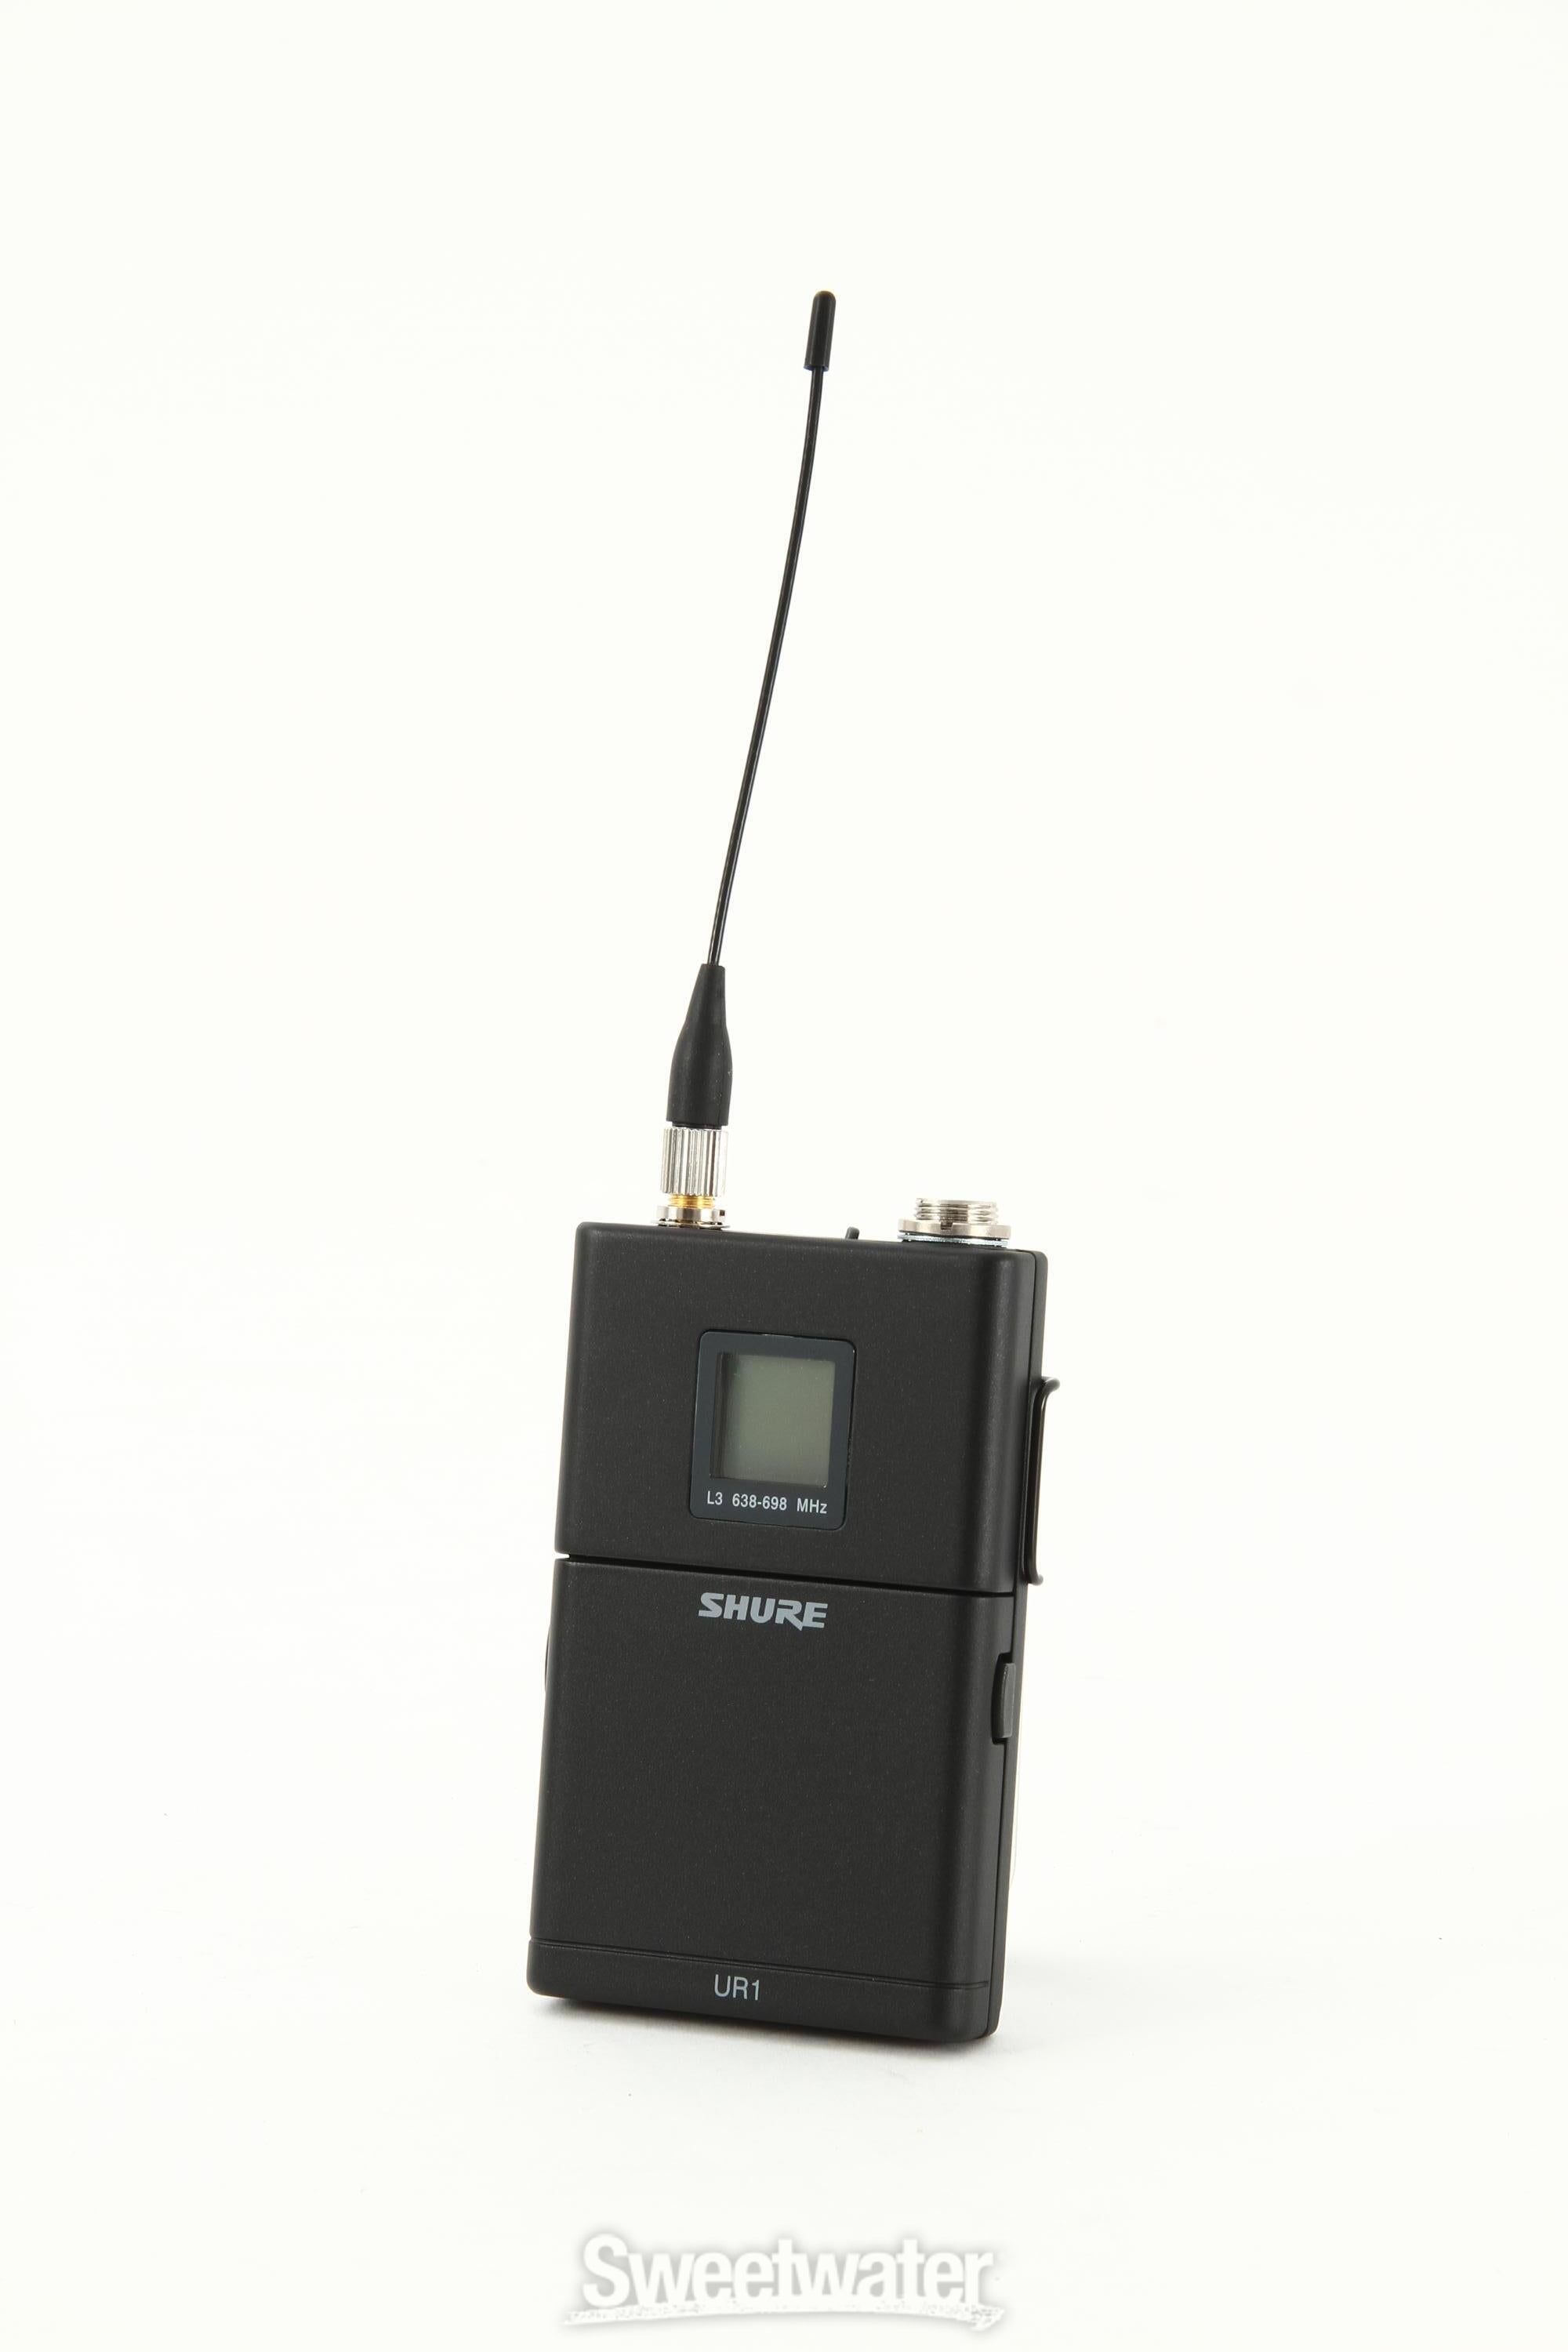 Shure UR1 - L3 Band, 638 - 698 MHz